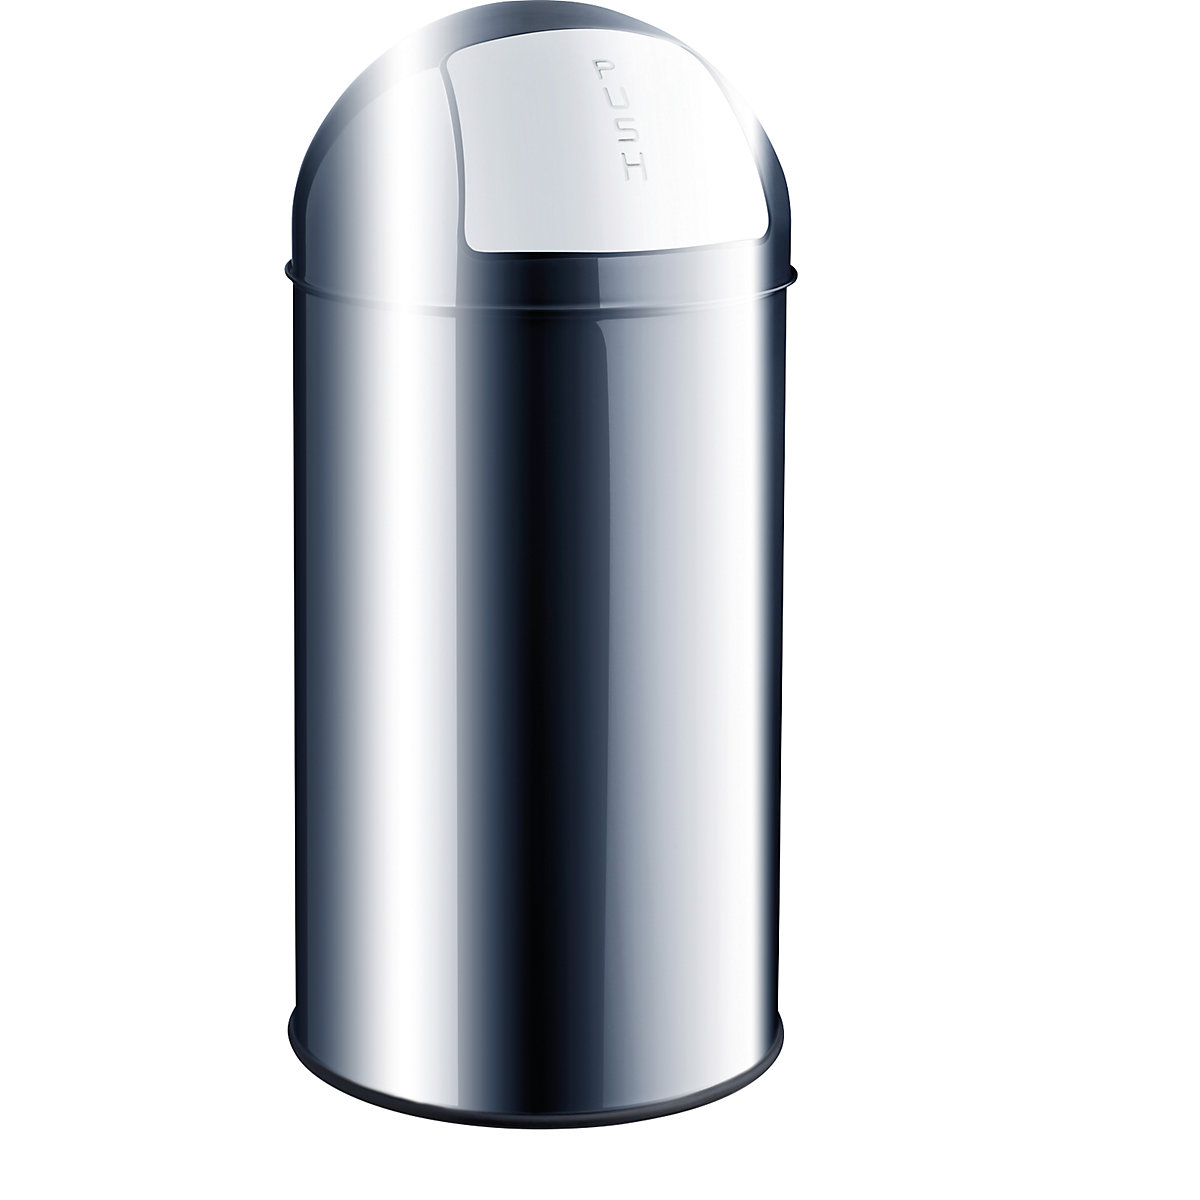 Spremnik za otpad od čelika s otvaranjem na pritisak – helit, volumen 50 l, VxØ 745 x 360 mm, nehrđajući čelik-2